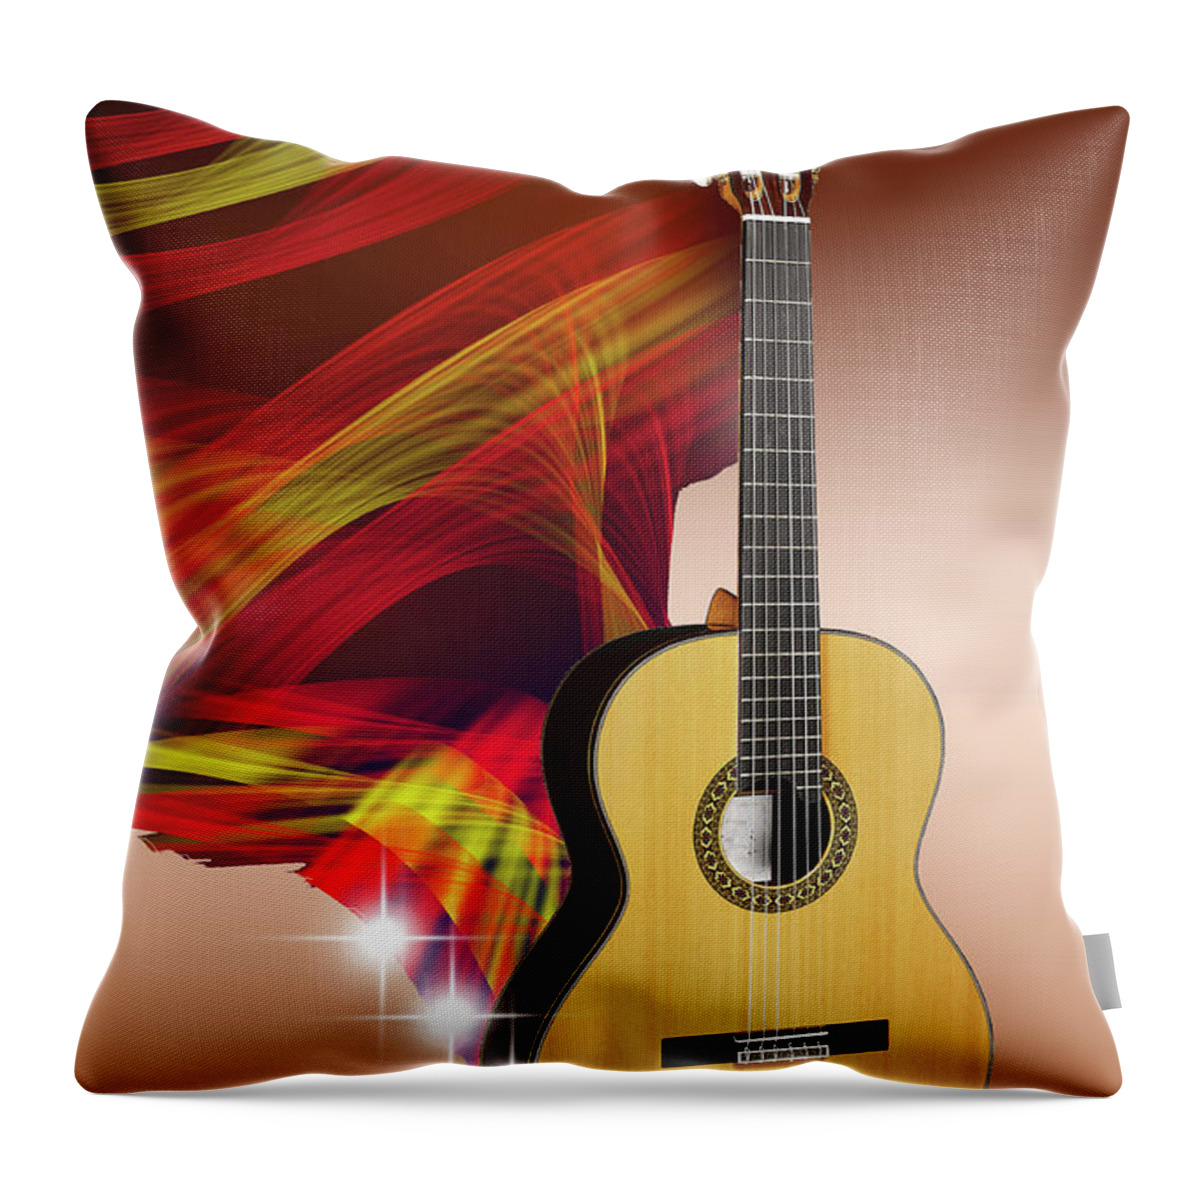 Digital Art Throw Pillow featuring the digital art Spanish guitar by Angel Jesus De la Fuente